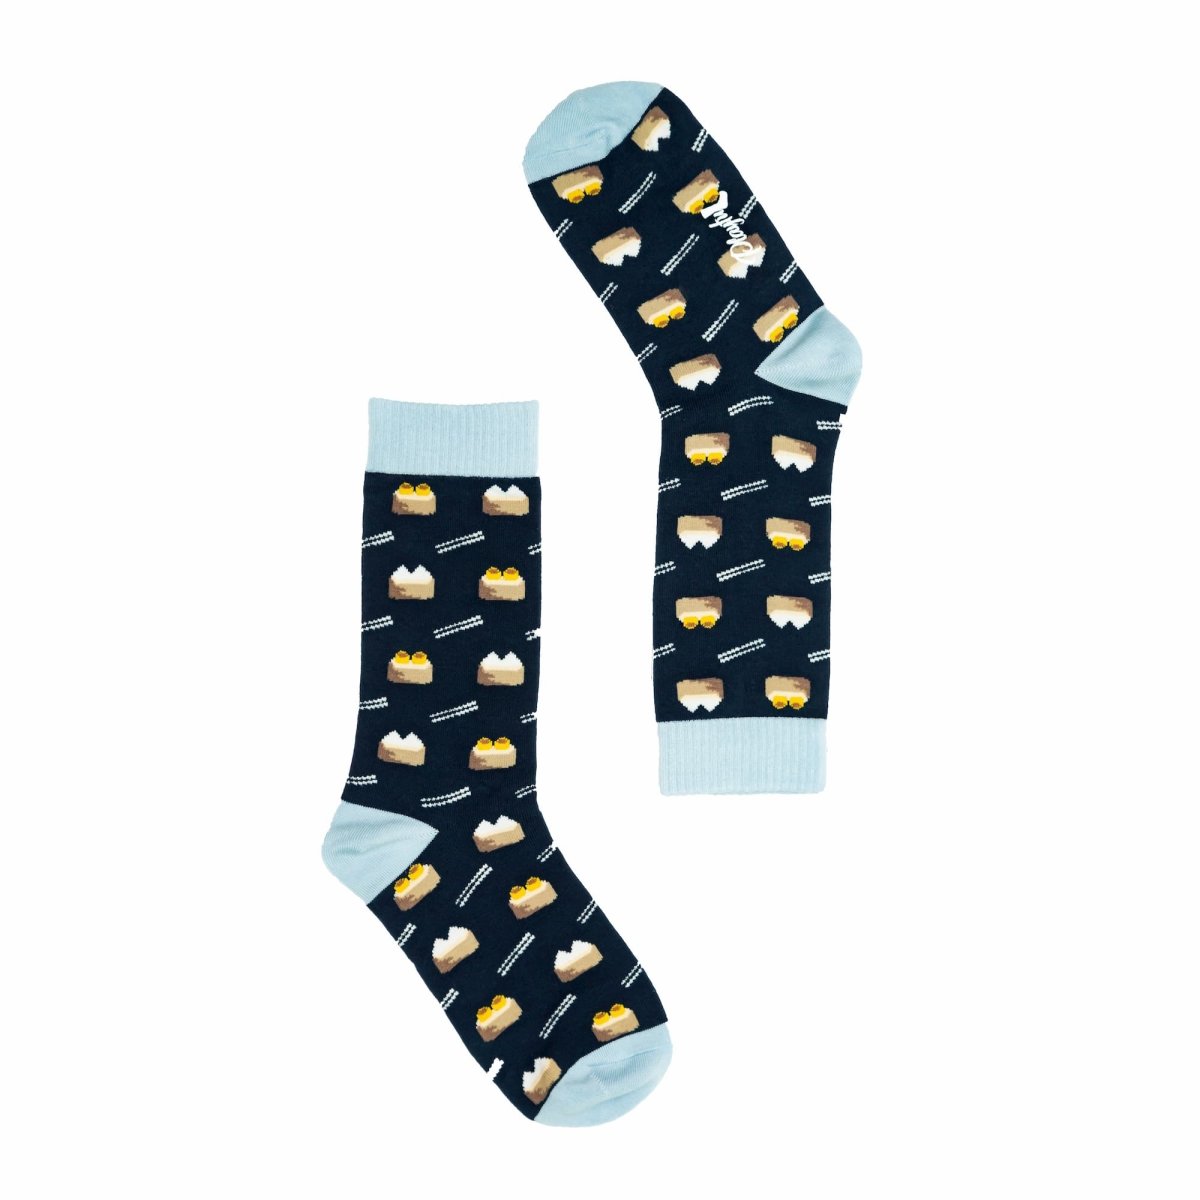 Dim Sum Socks by Playful - LOVINGLY SIGNED (HK)